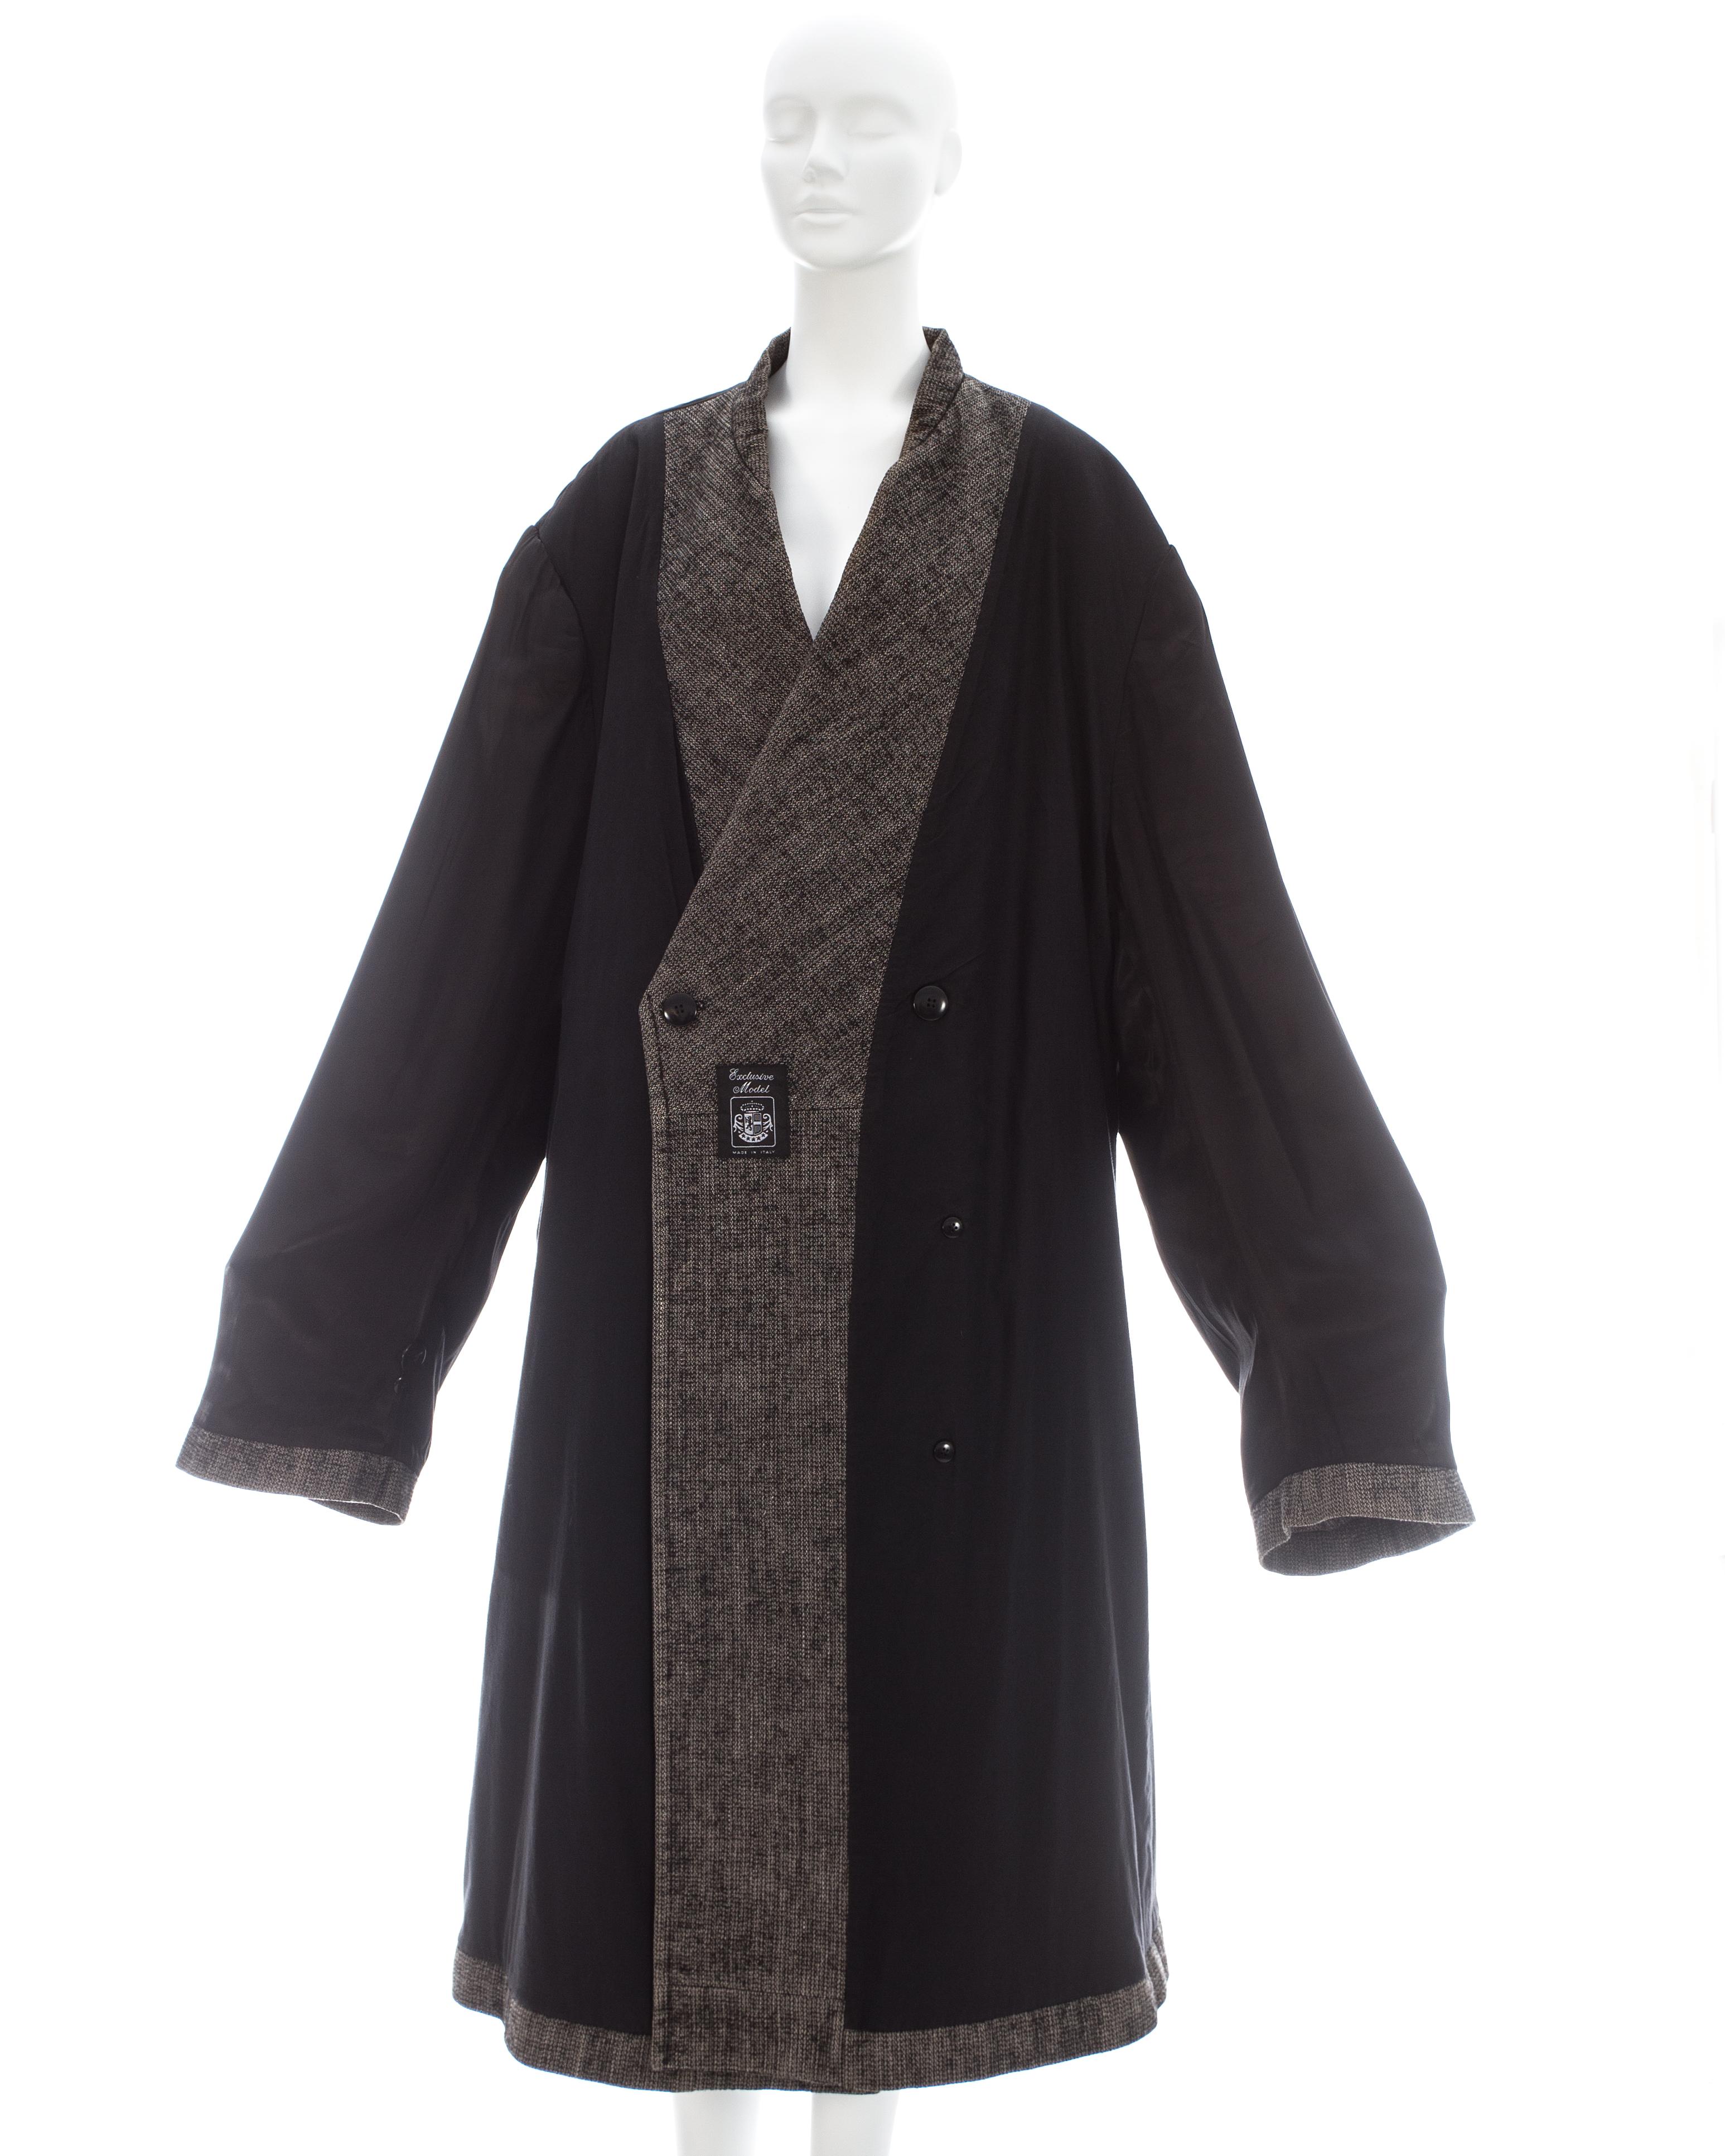 Martin Margiela grey wool and linen XXL size 78 double inside coat, fw 2000 5